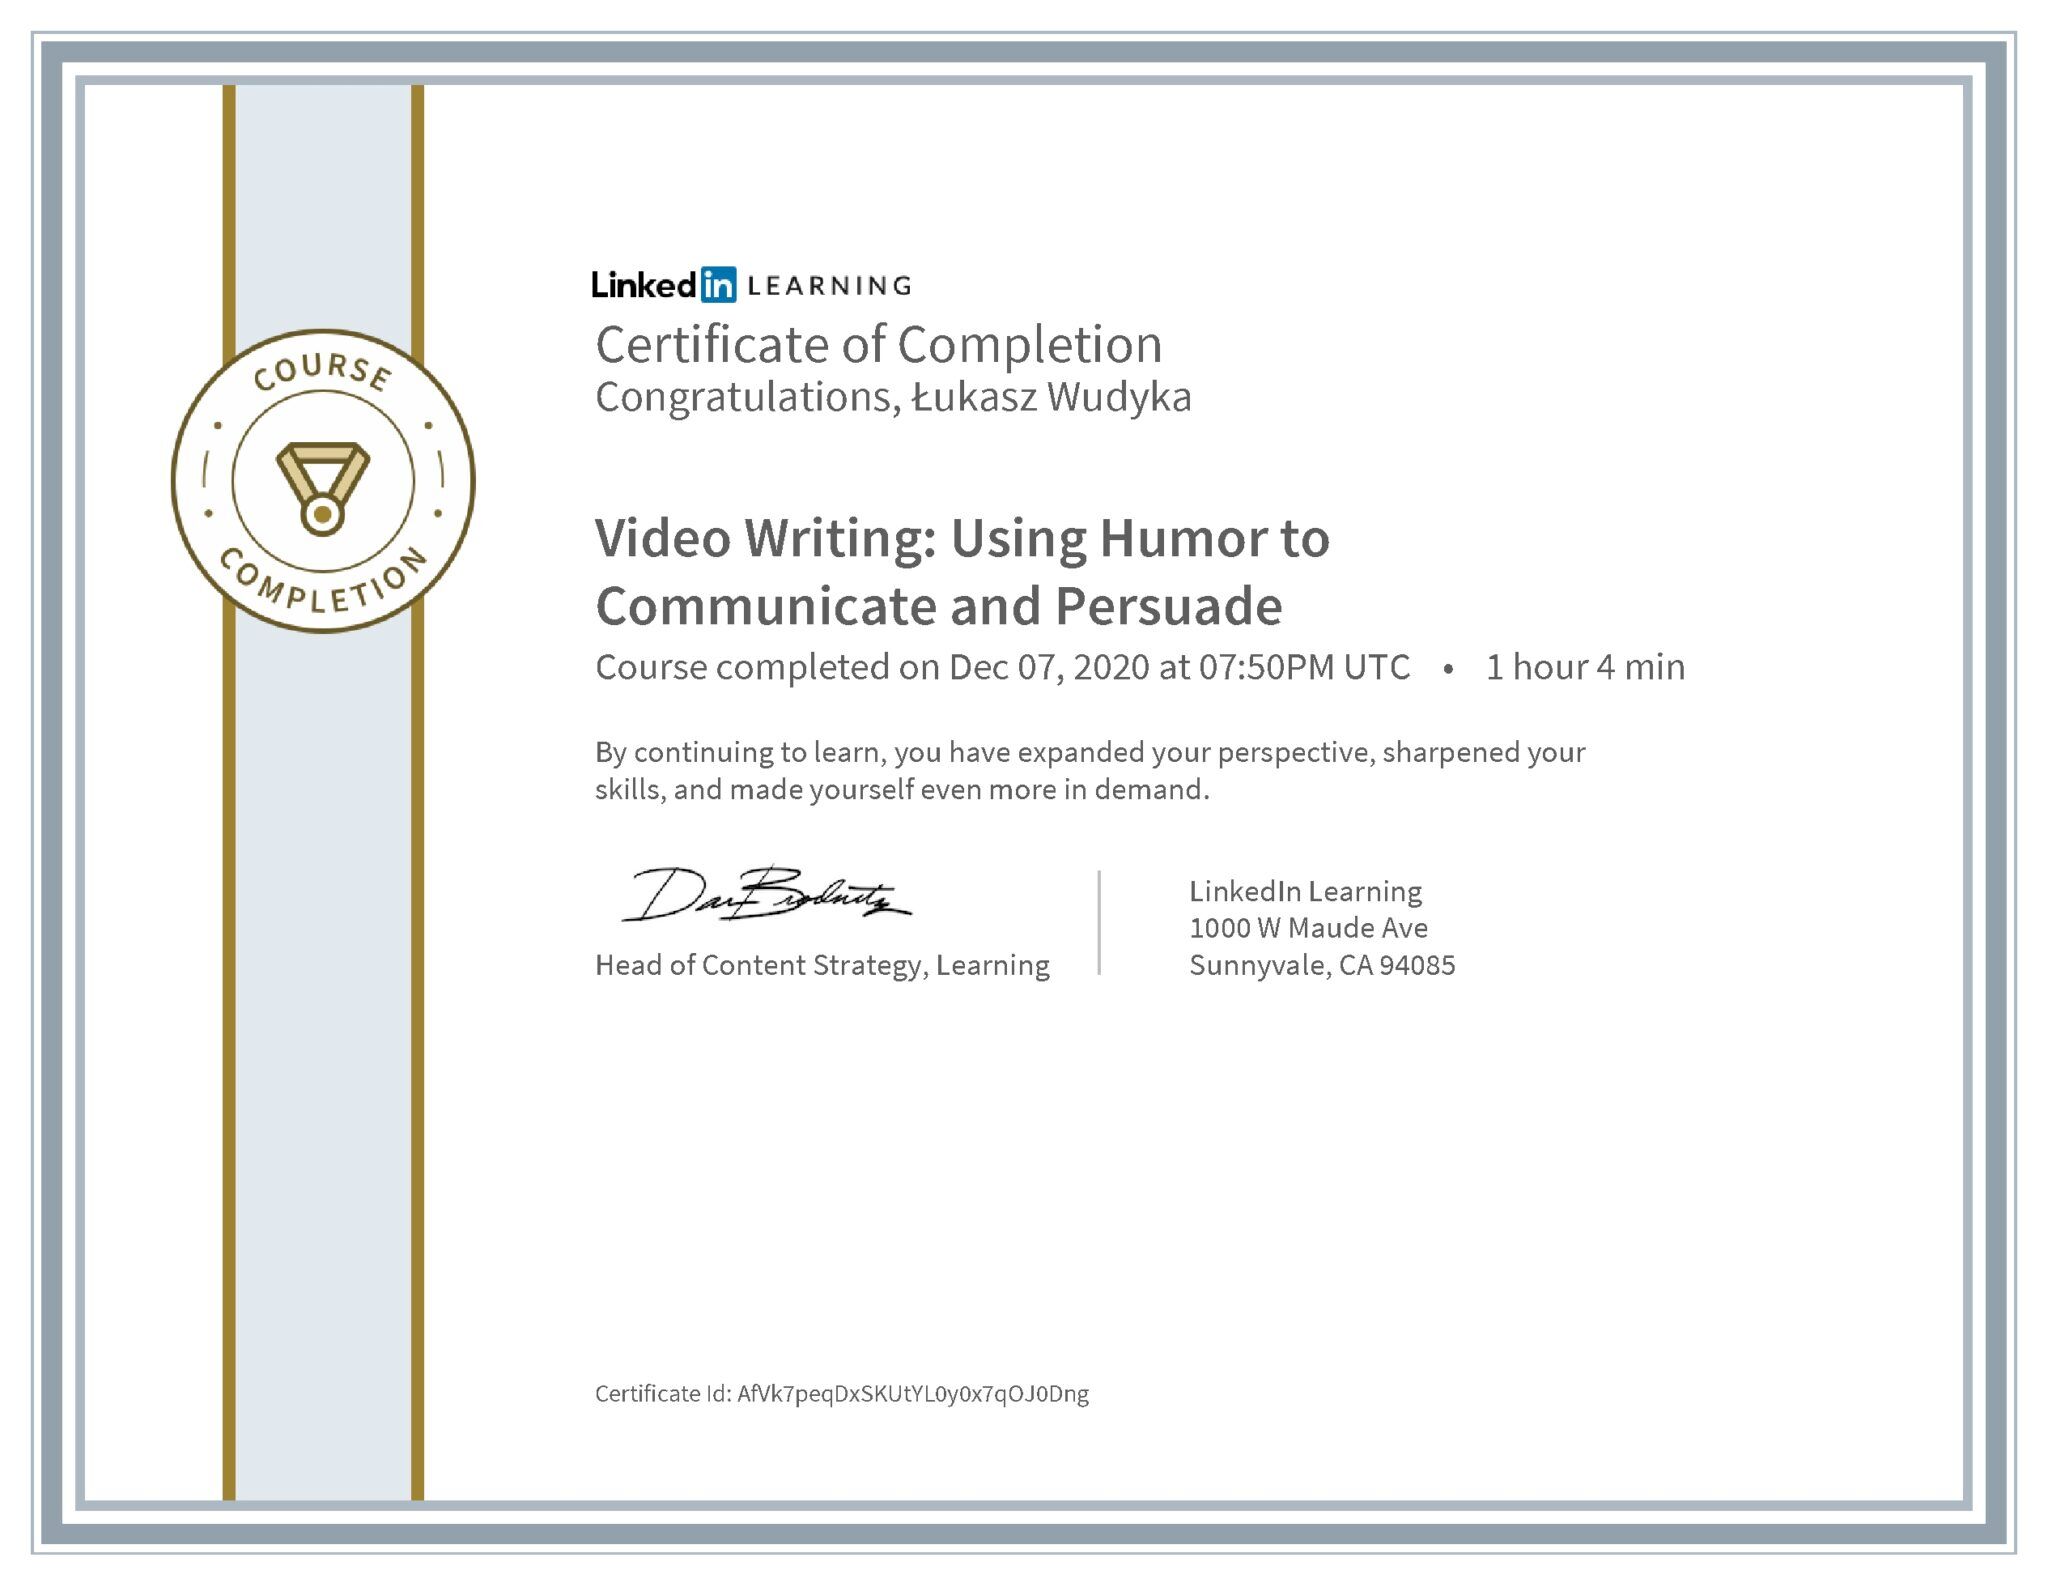 Łukasz Wudyka certyfikat LinkedIn Video Writing: Using Humor to Communicate and Persuade